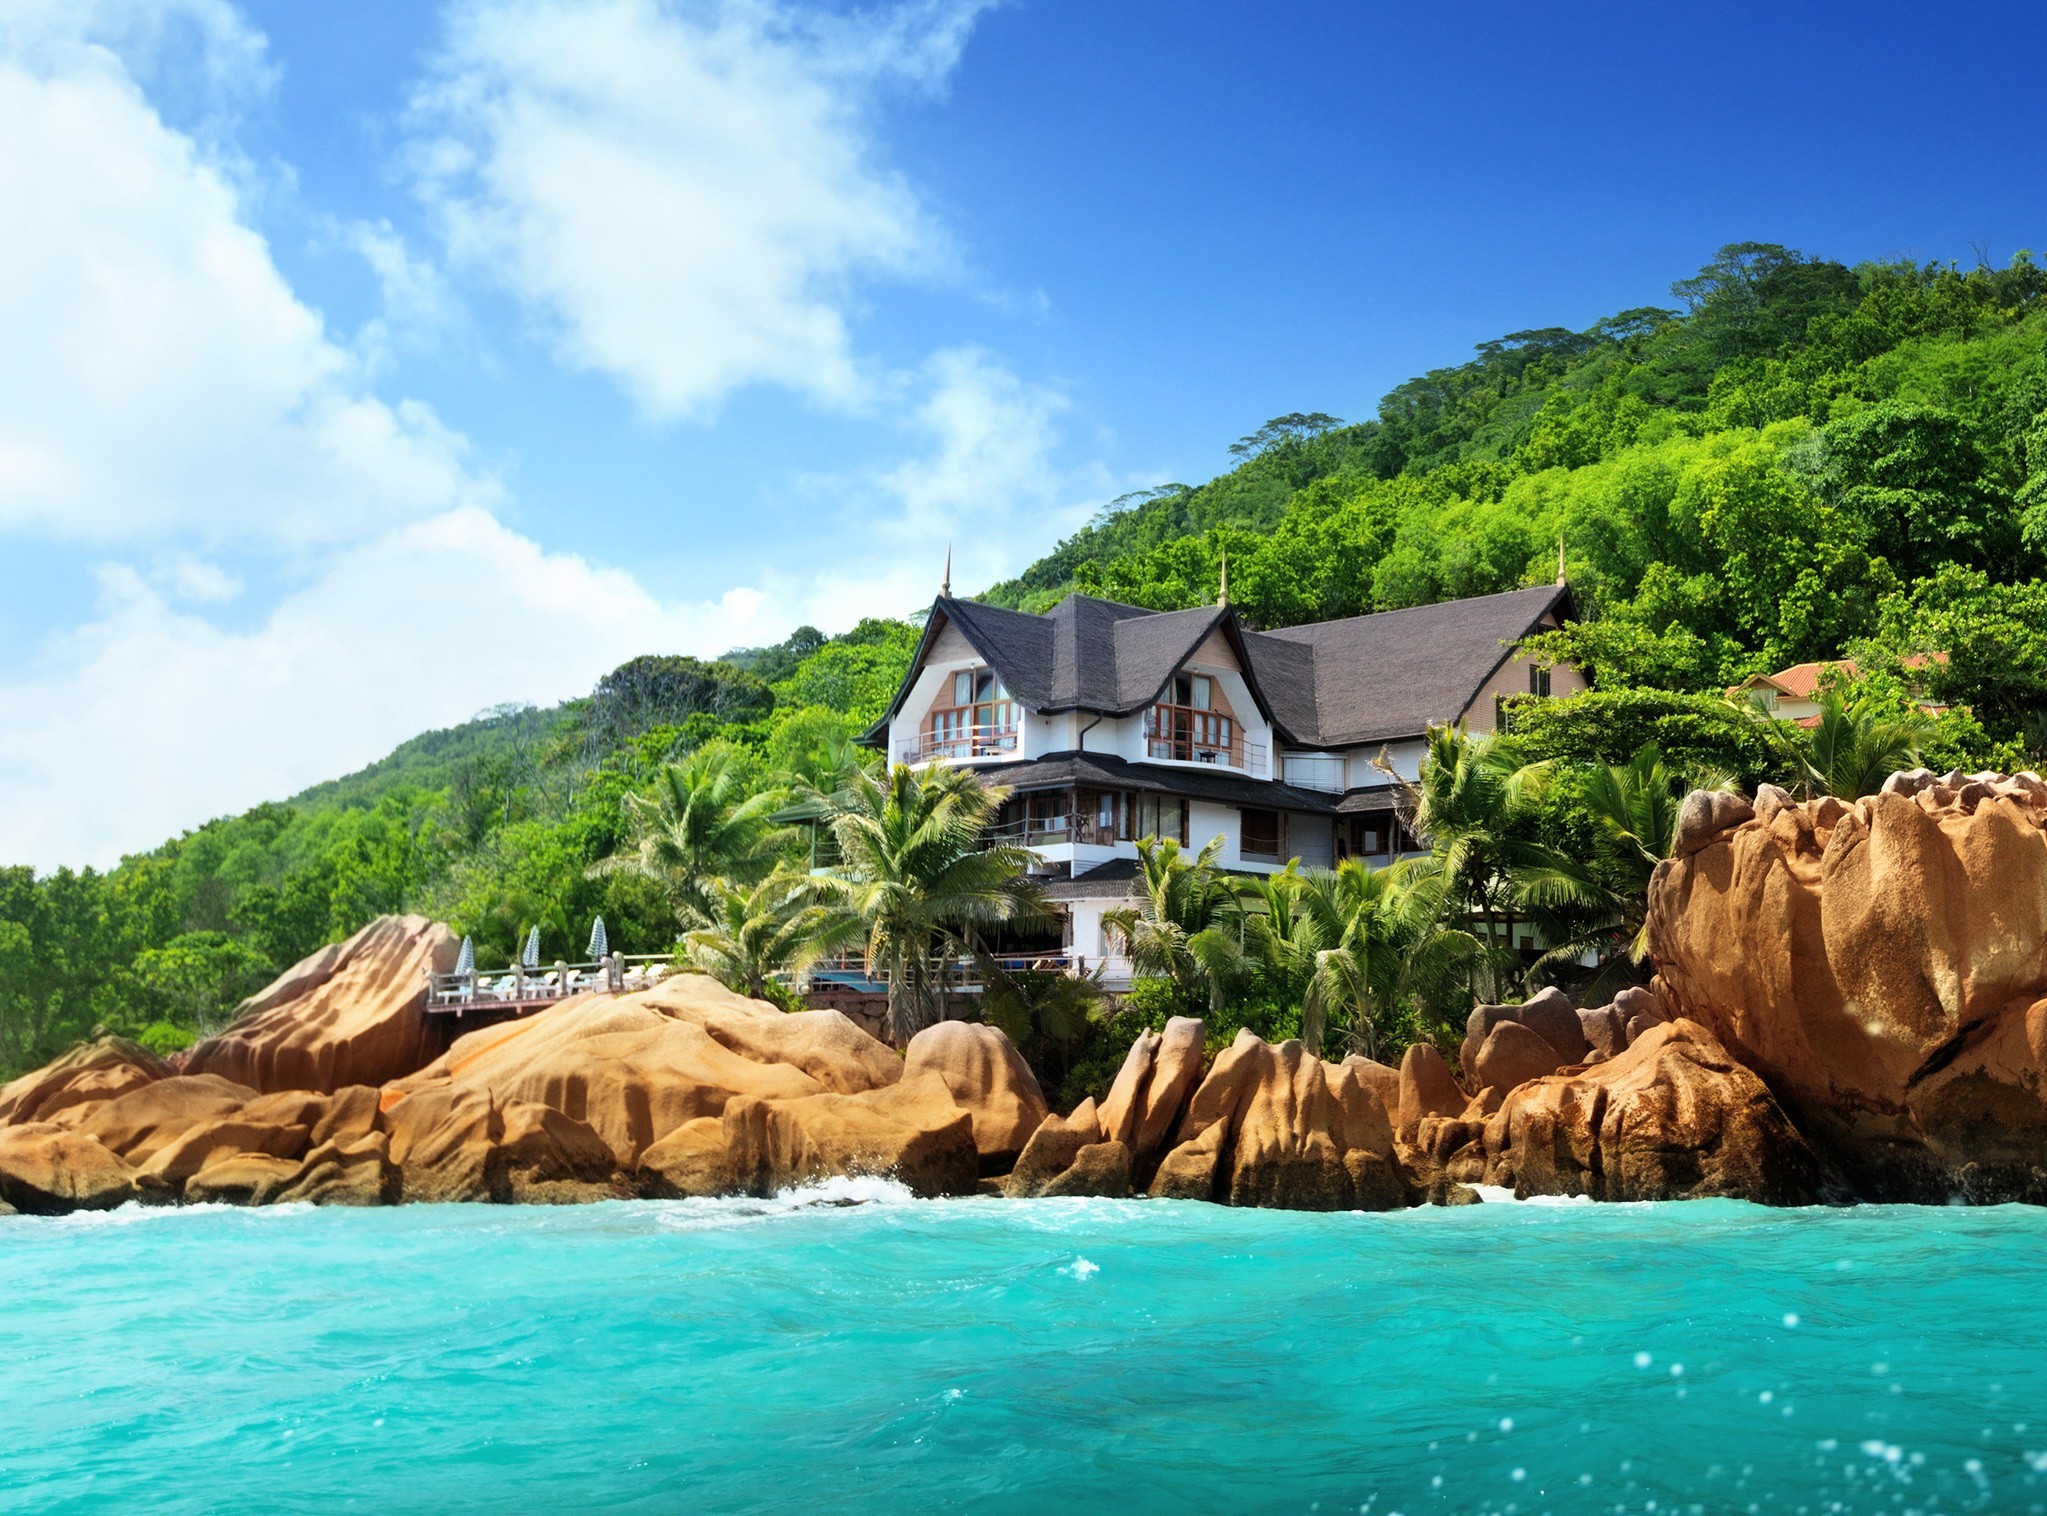 House Mansion Seashore Tropics 2047x1516